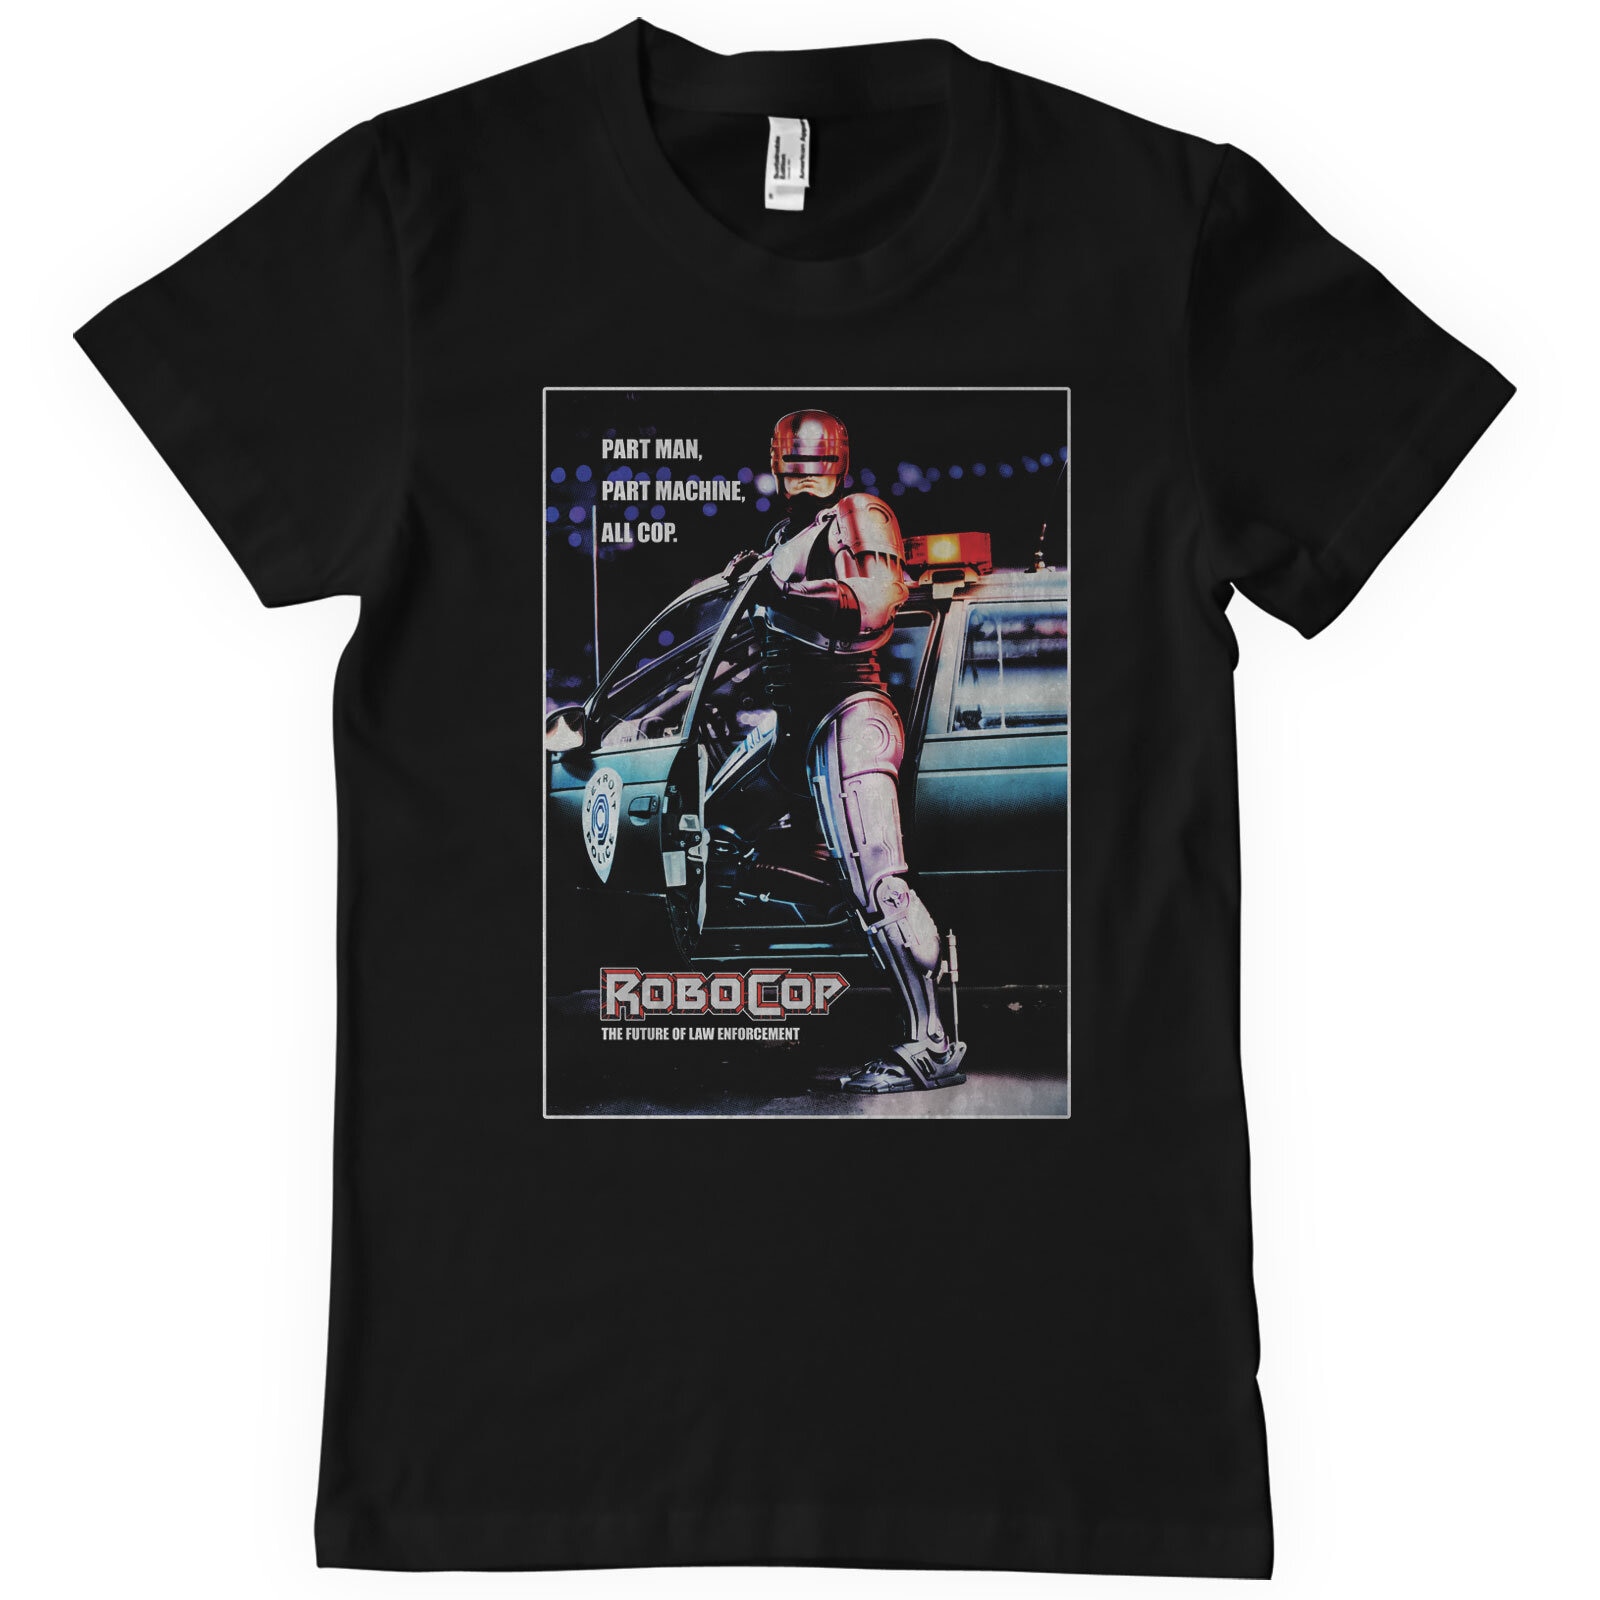 Robocop VHS Cover T-Shirt